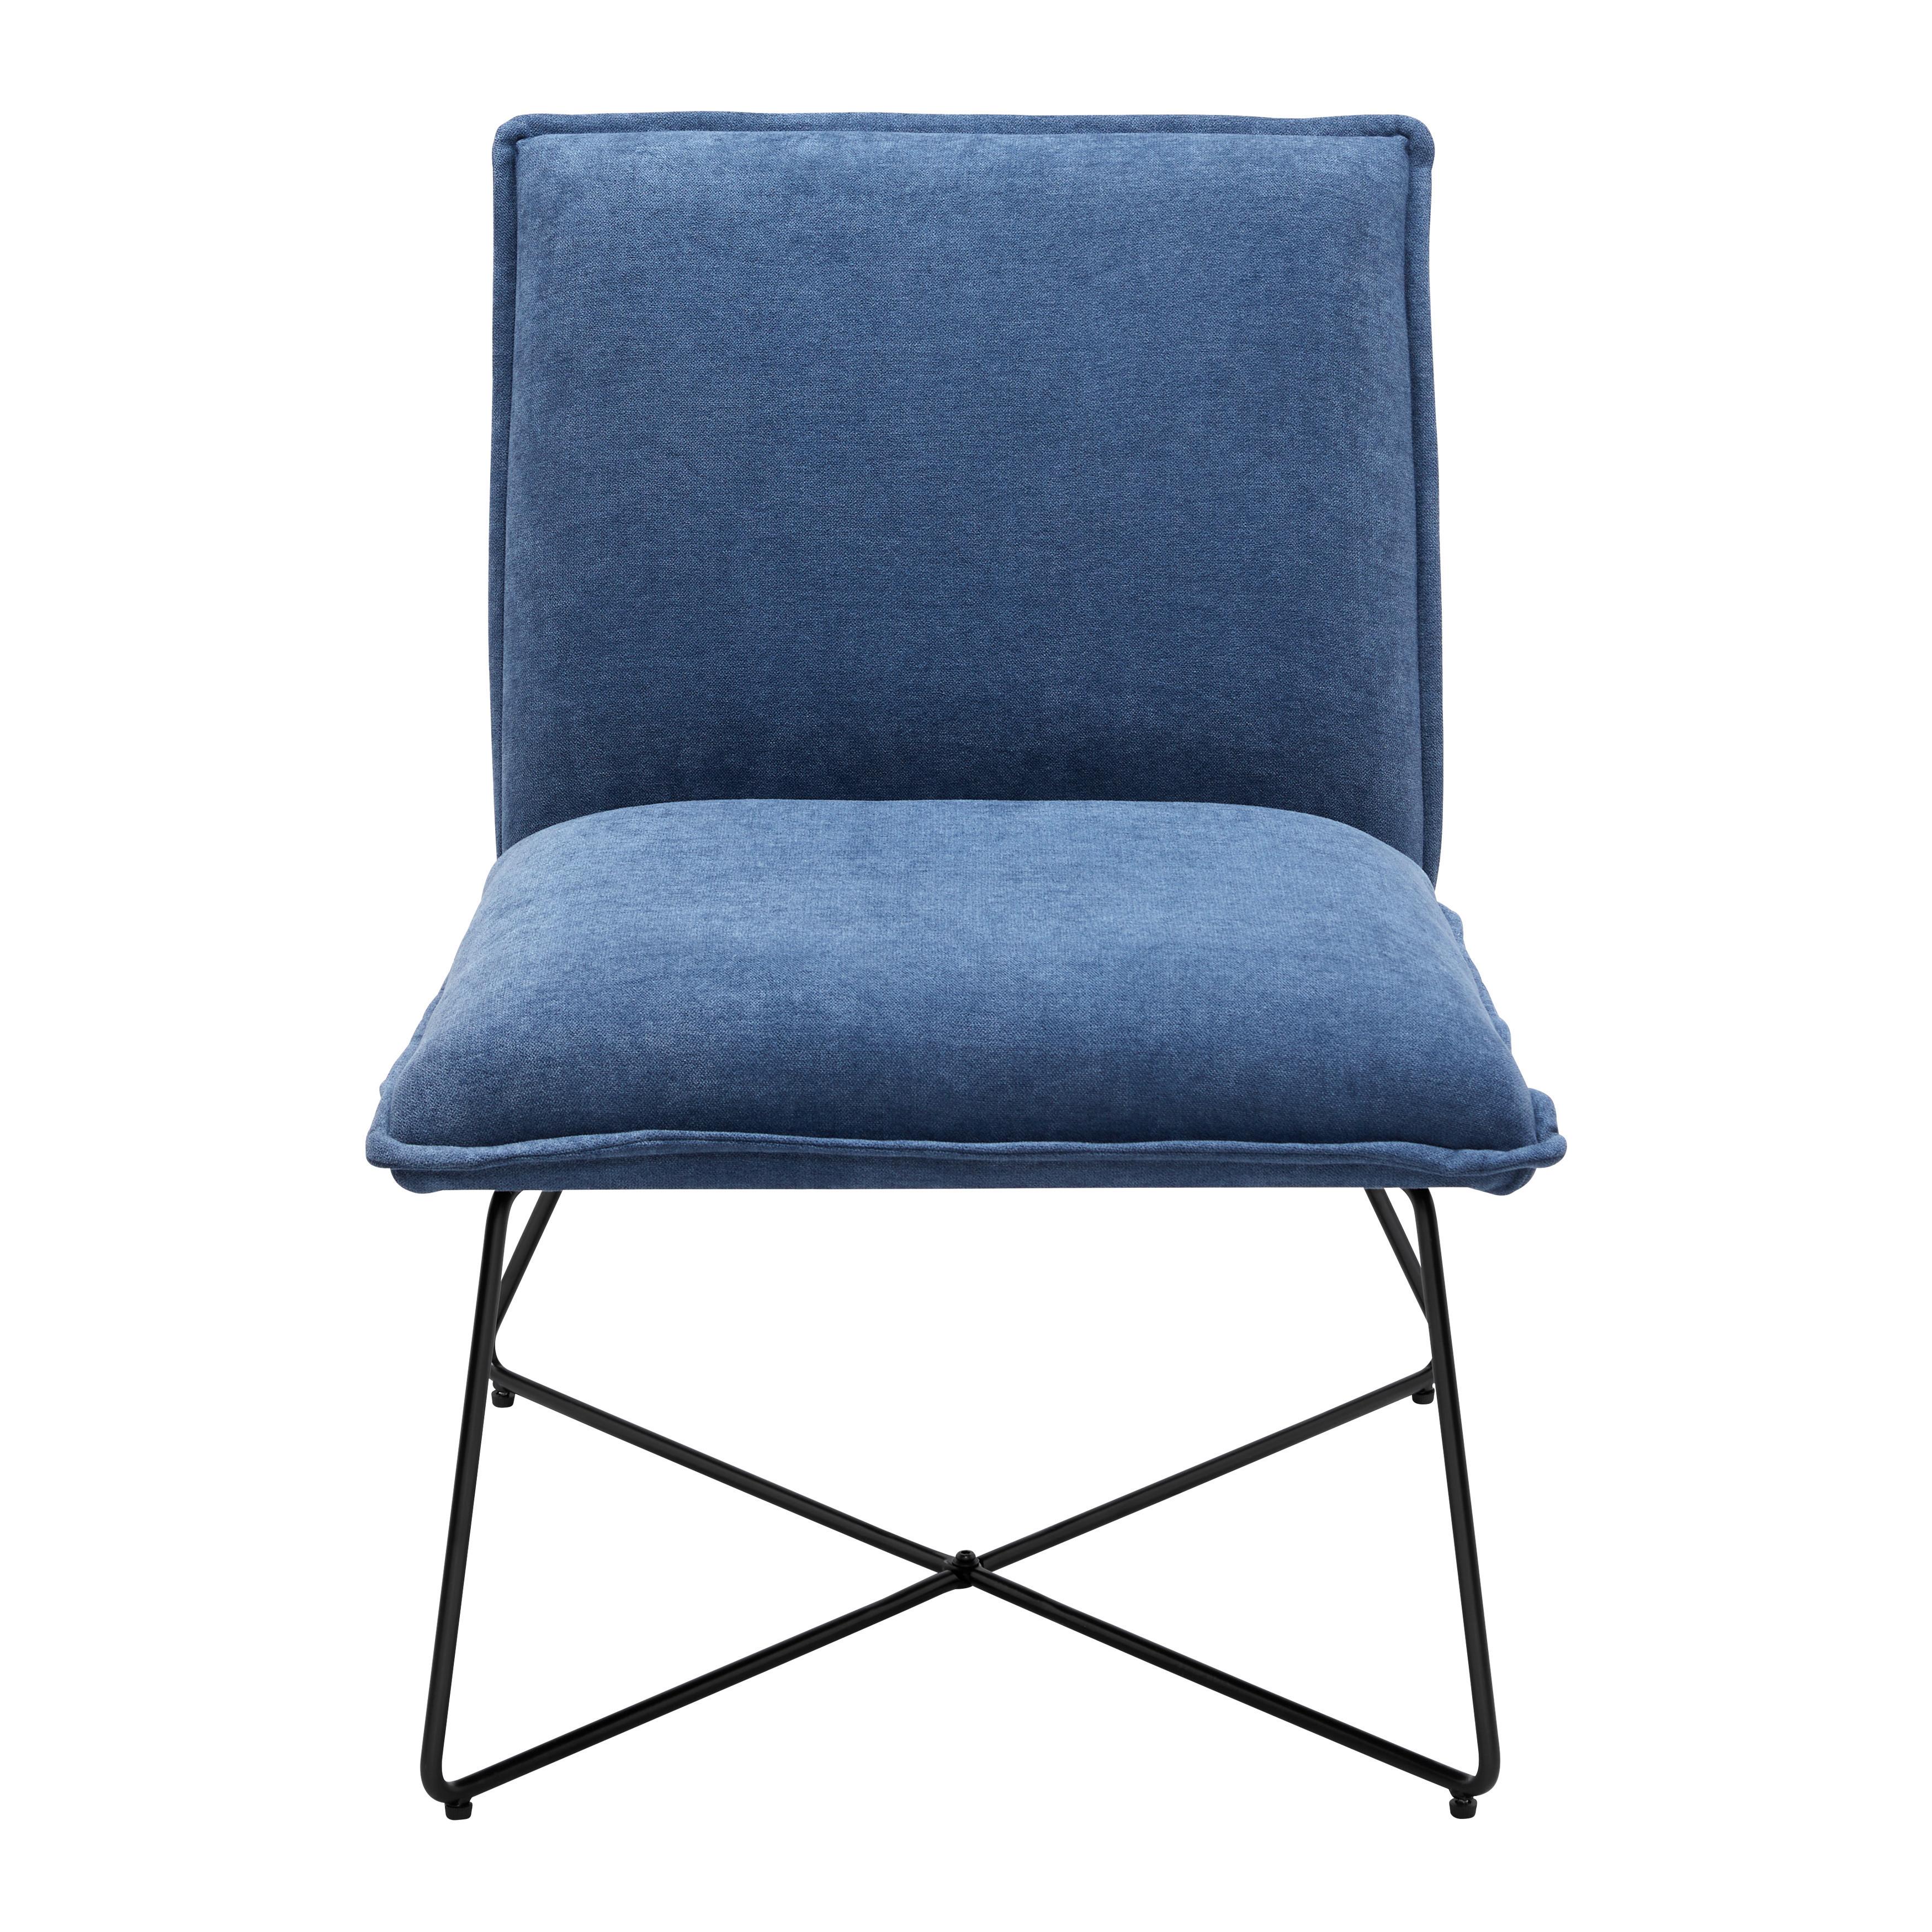 Loungesessel blau, "Filip" - Blau, MODERN, Holz/Textil (63/82/69cm) - Bessagi Home